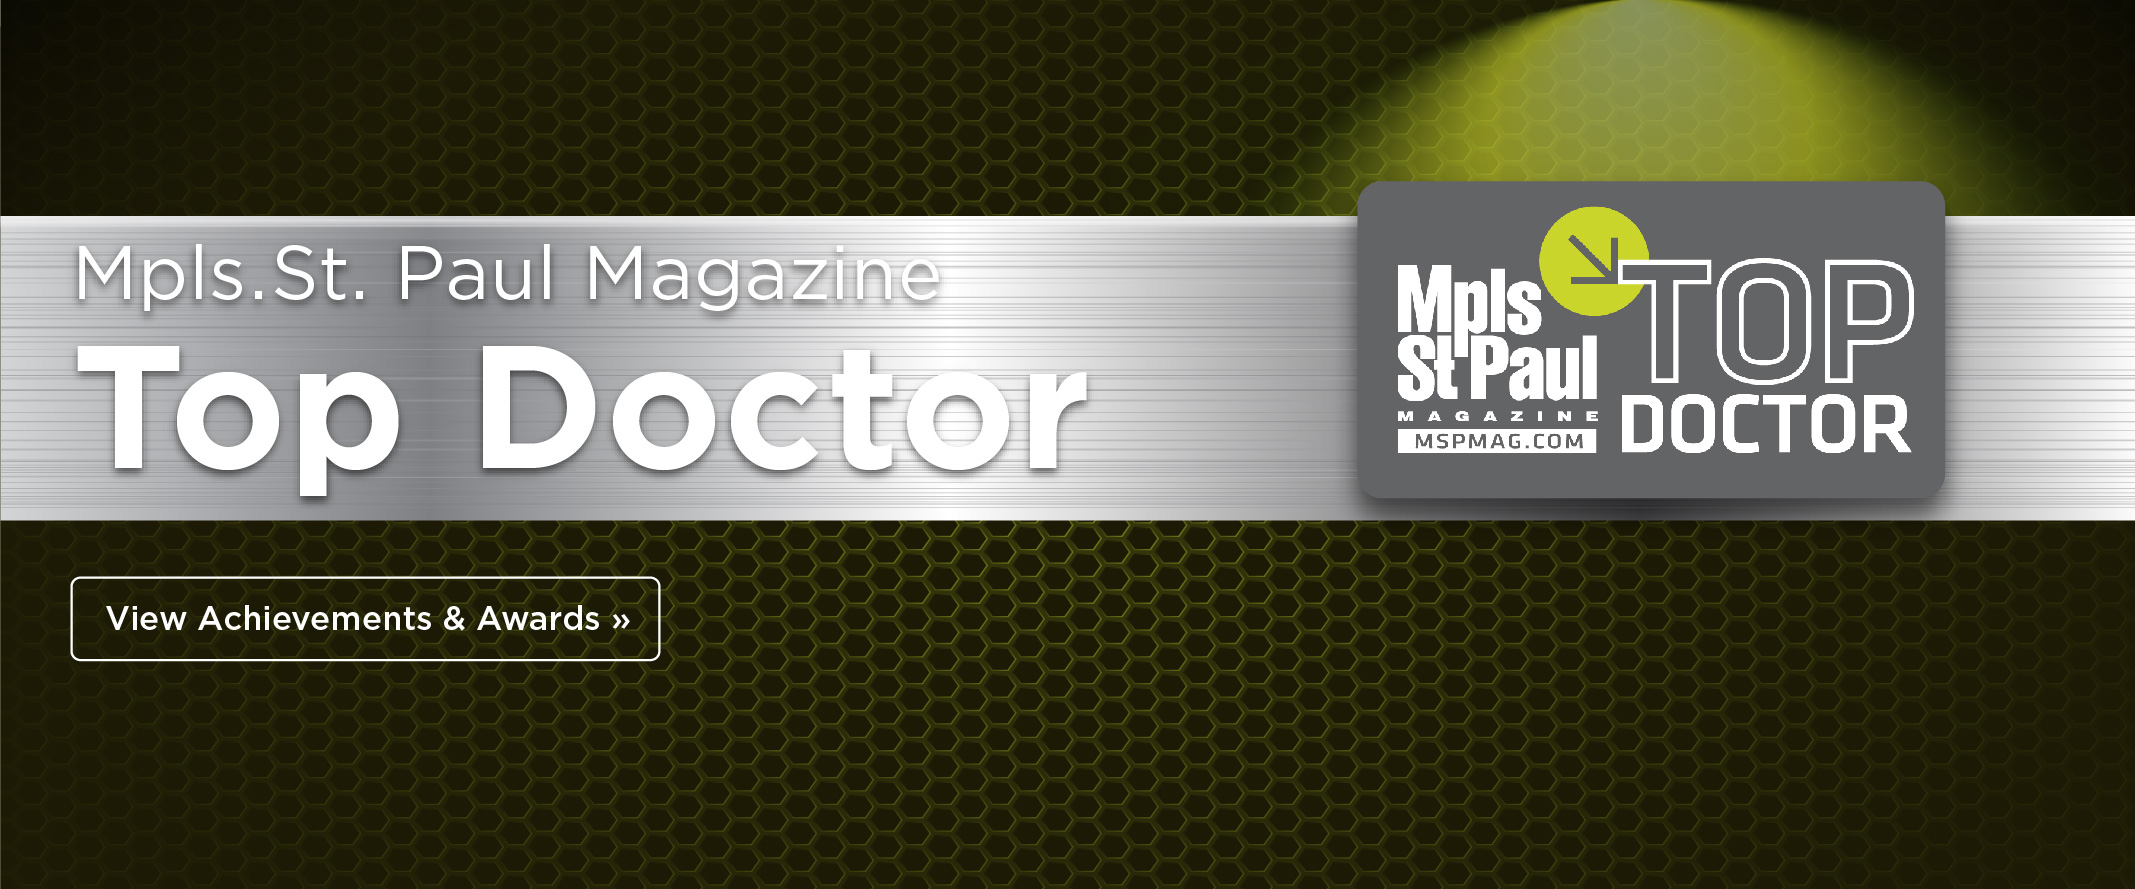 Dr. Paul Crowe Minneapolis St. Paul Magazine Top Doctor